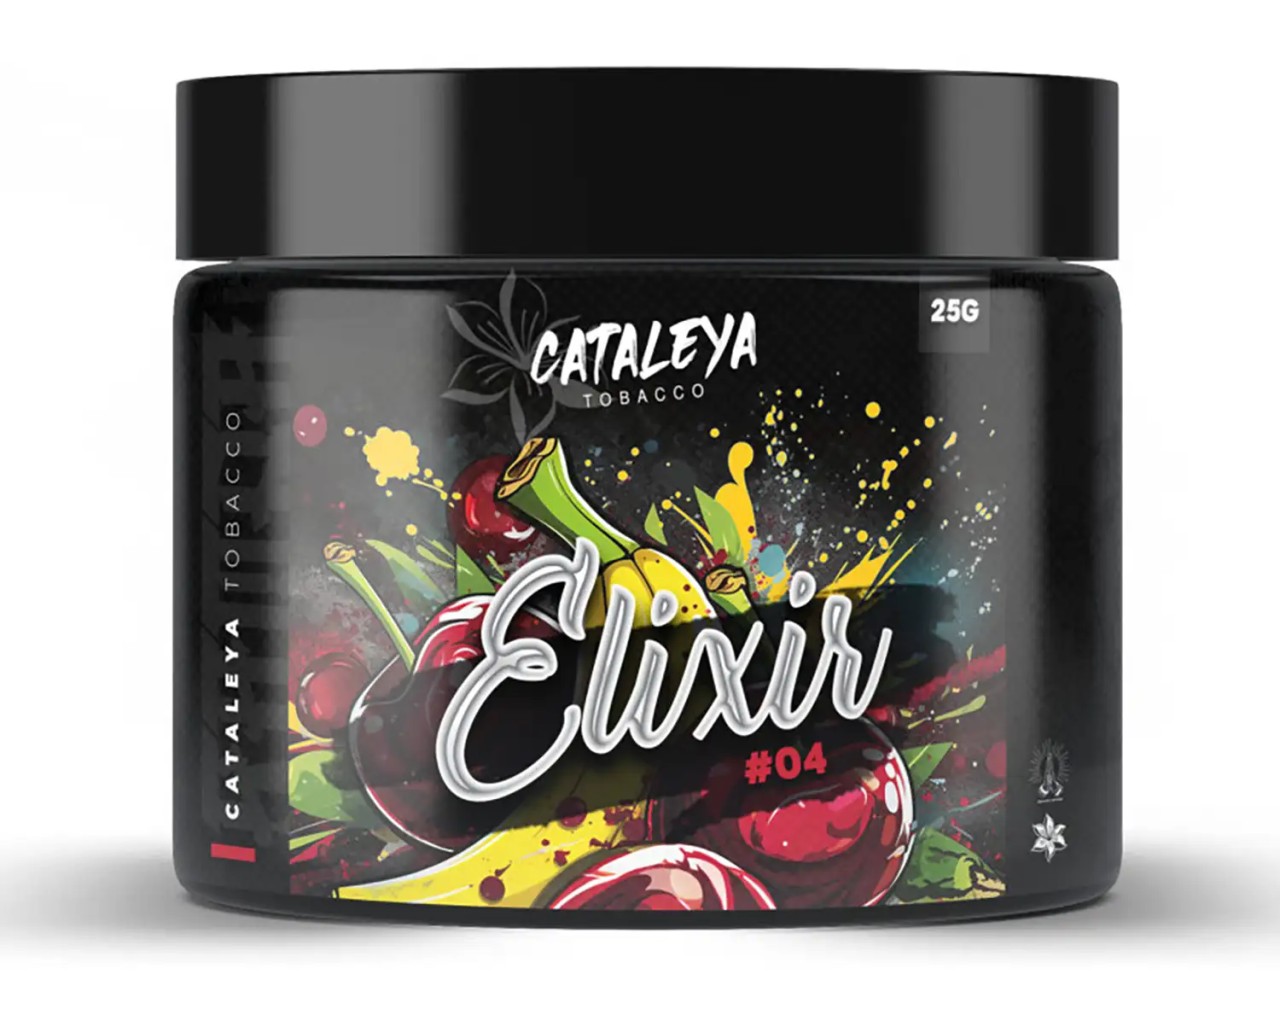 Cataleya Tobacco 25g - Elixir #04